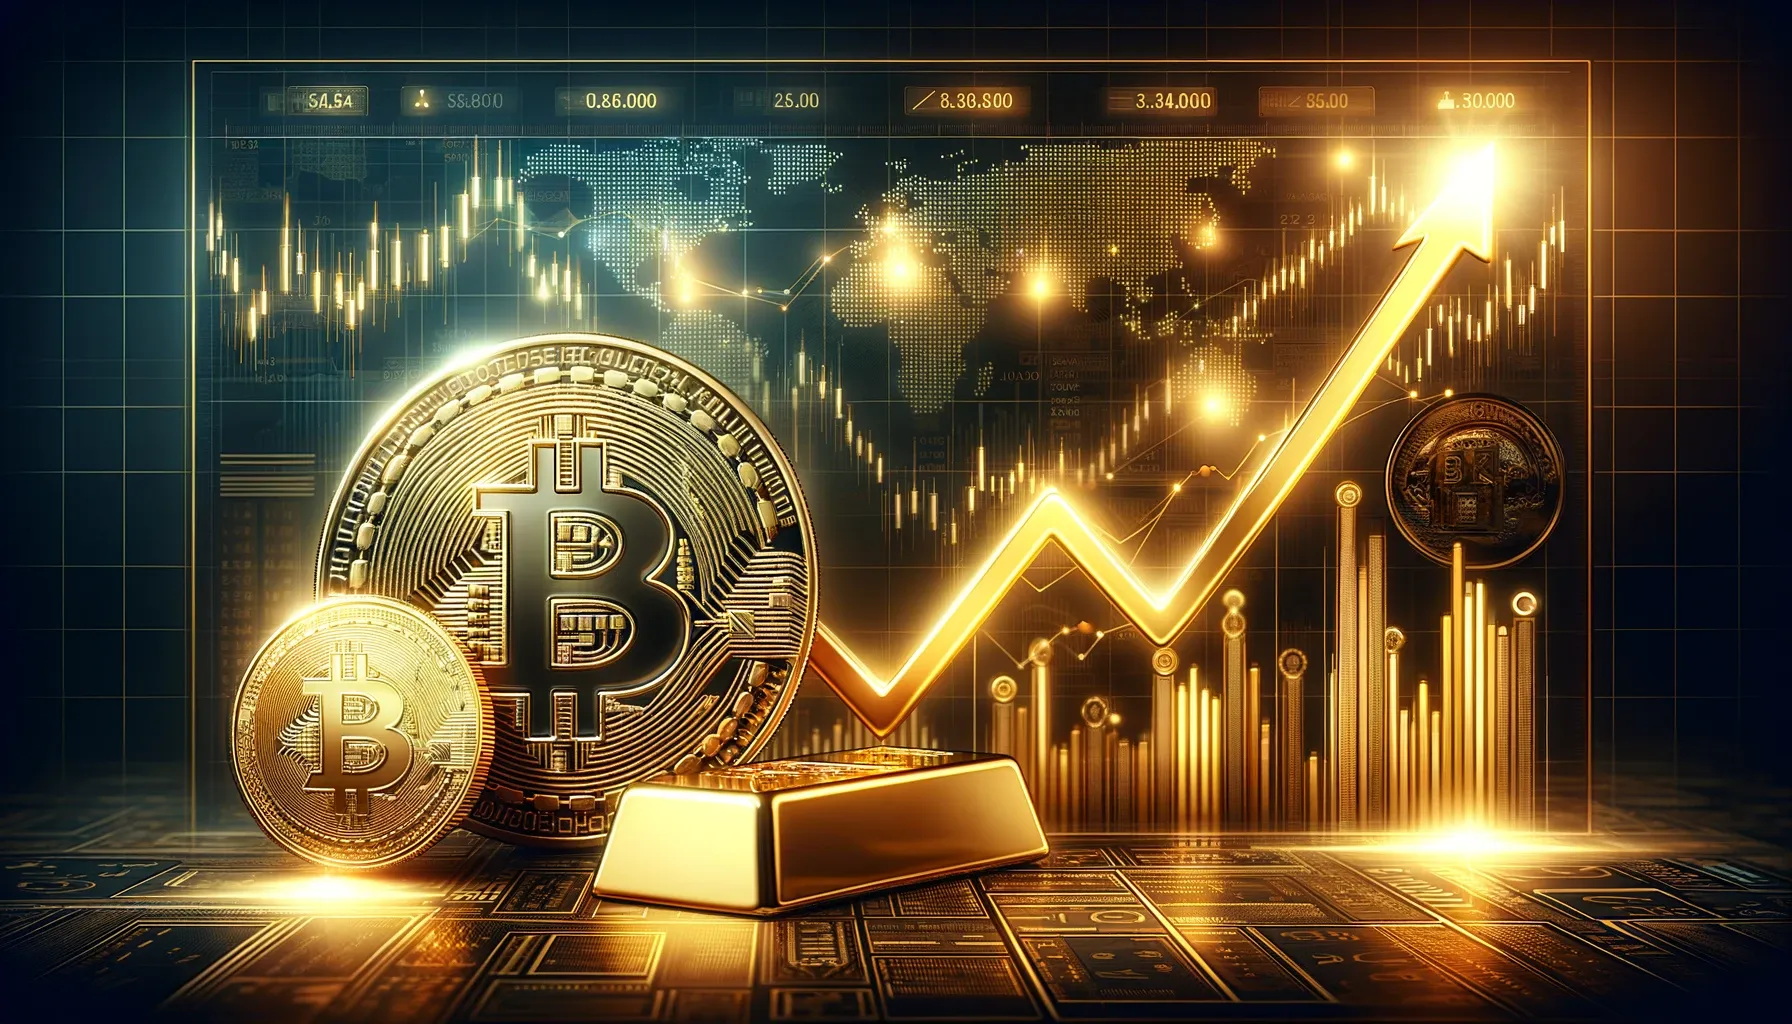 Bitcoin climbs above $59,000, nears record high